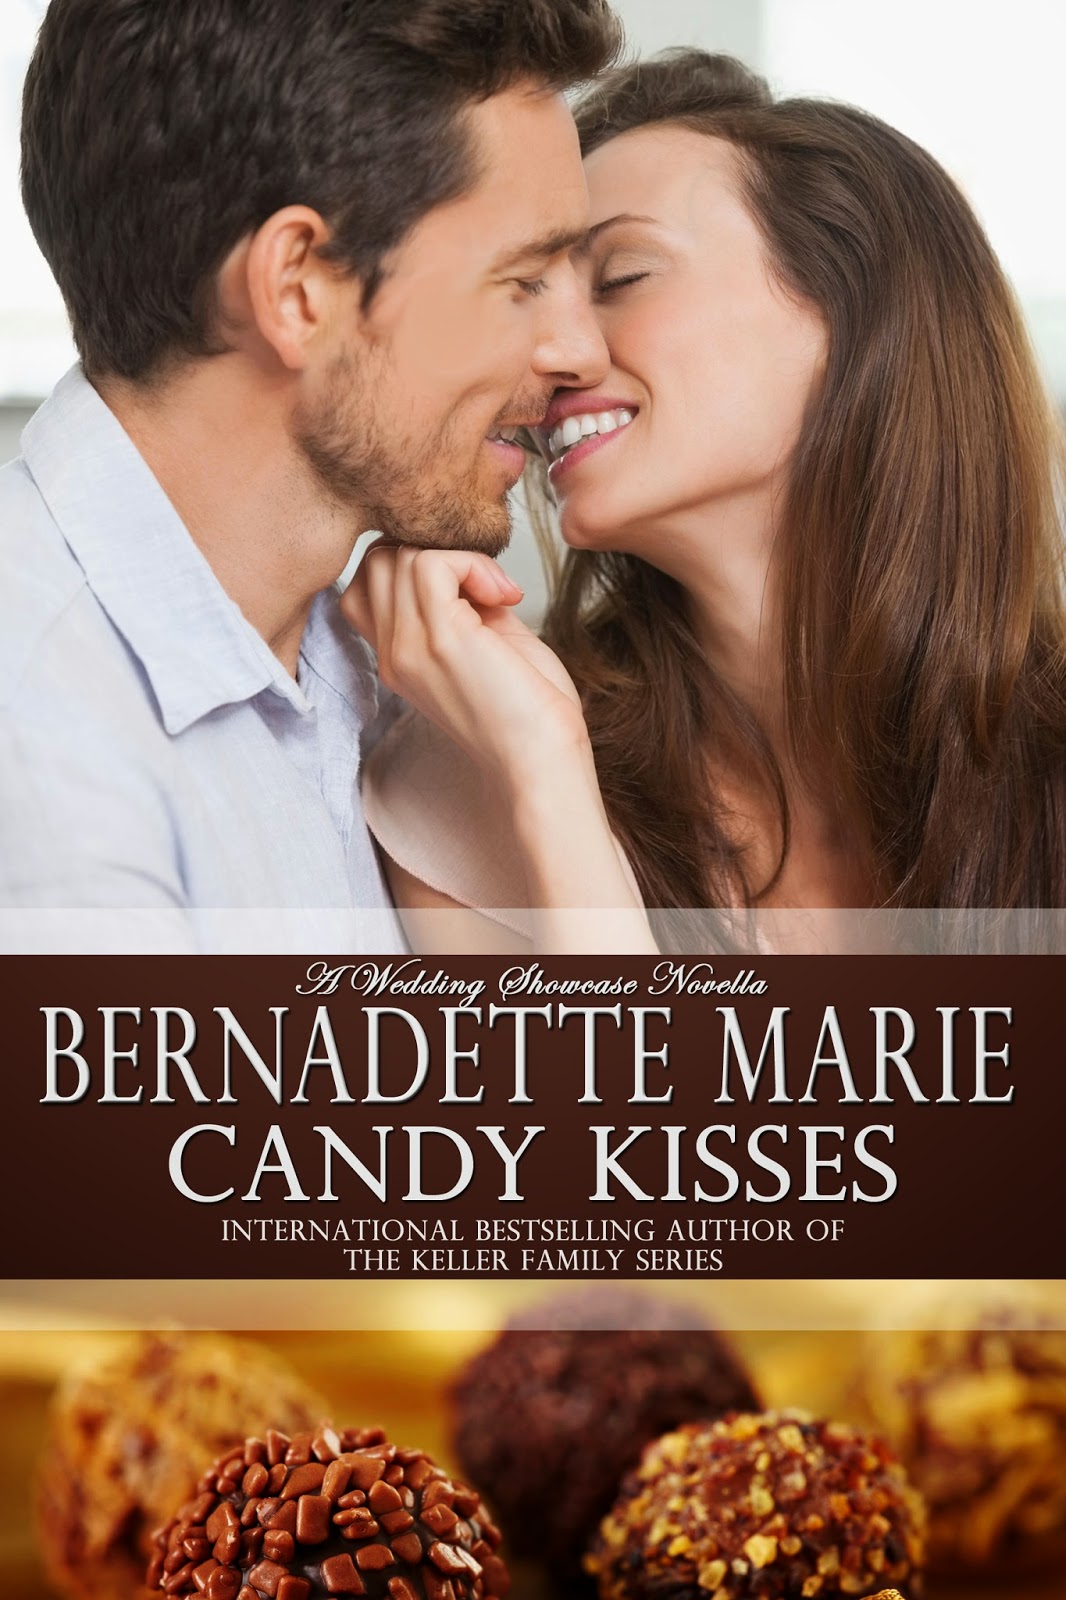 Киссес. Candy Marie. A Thousand boy Kisses книга обложка.